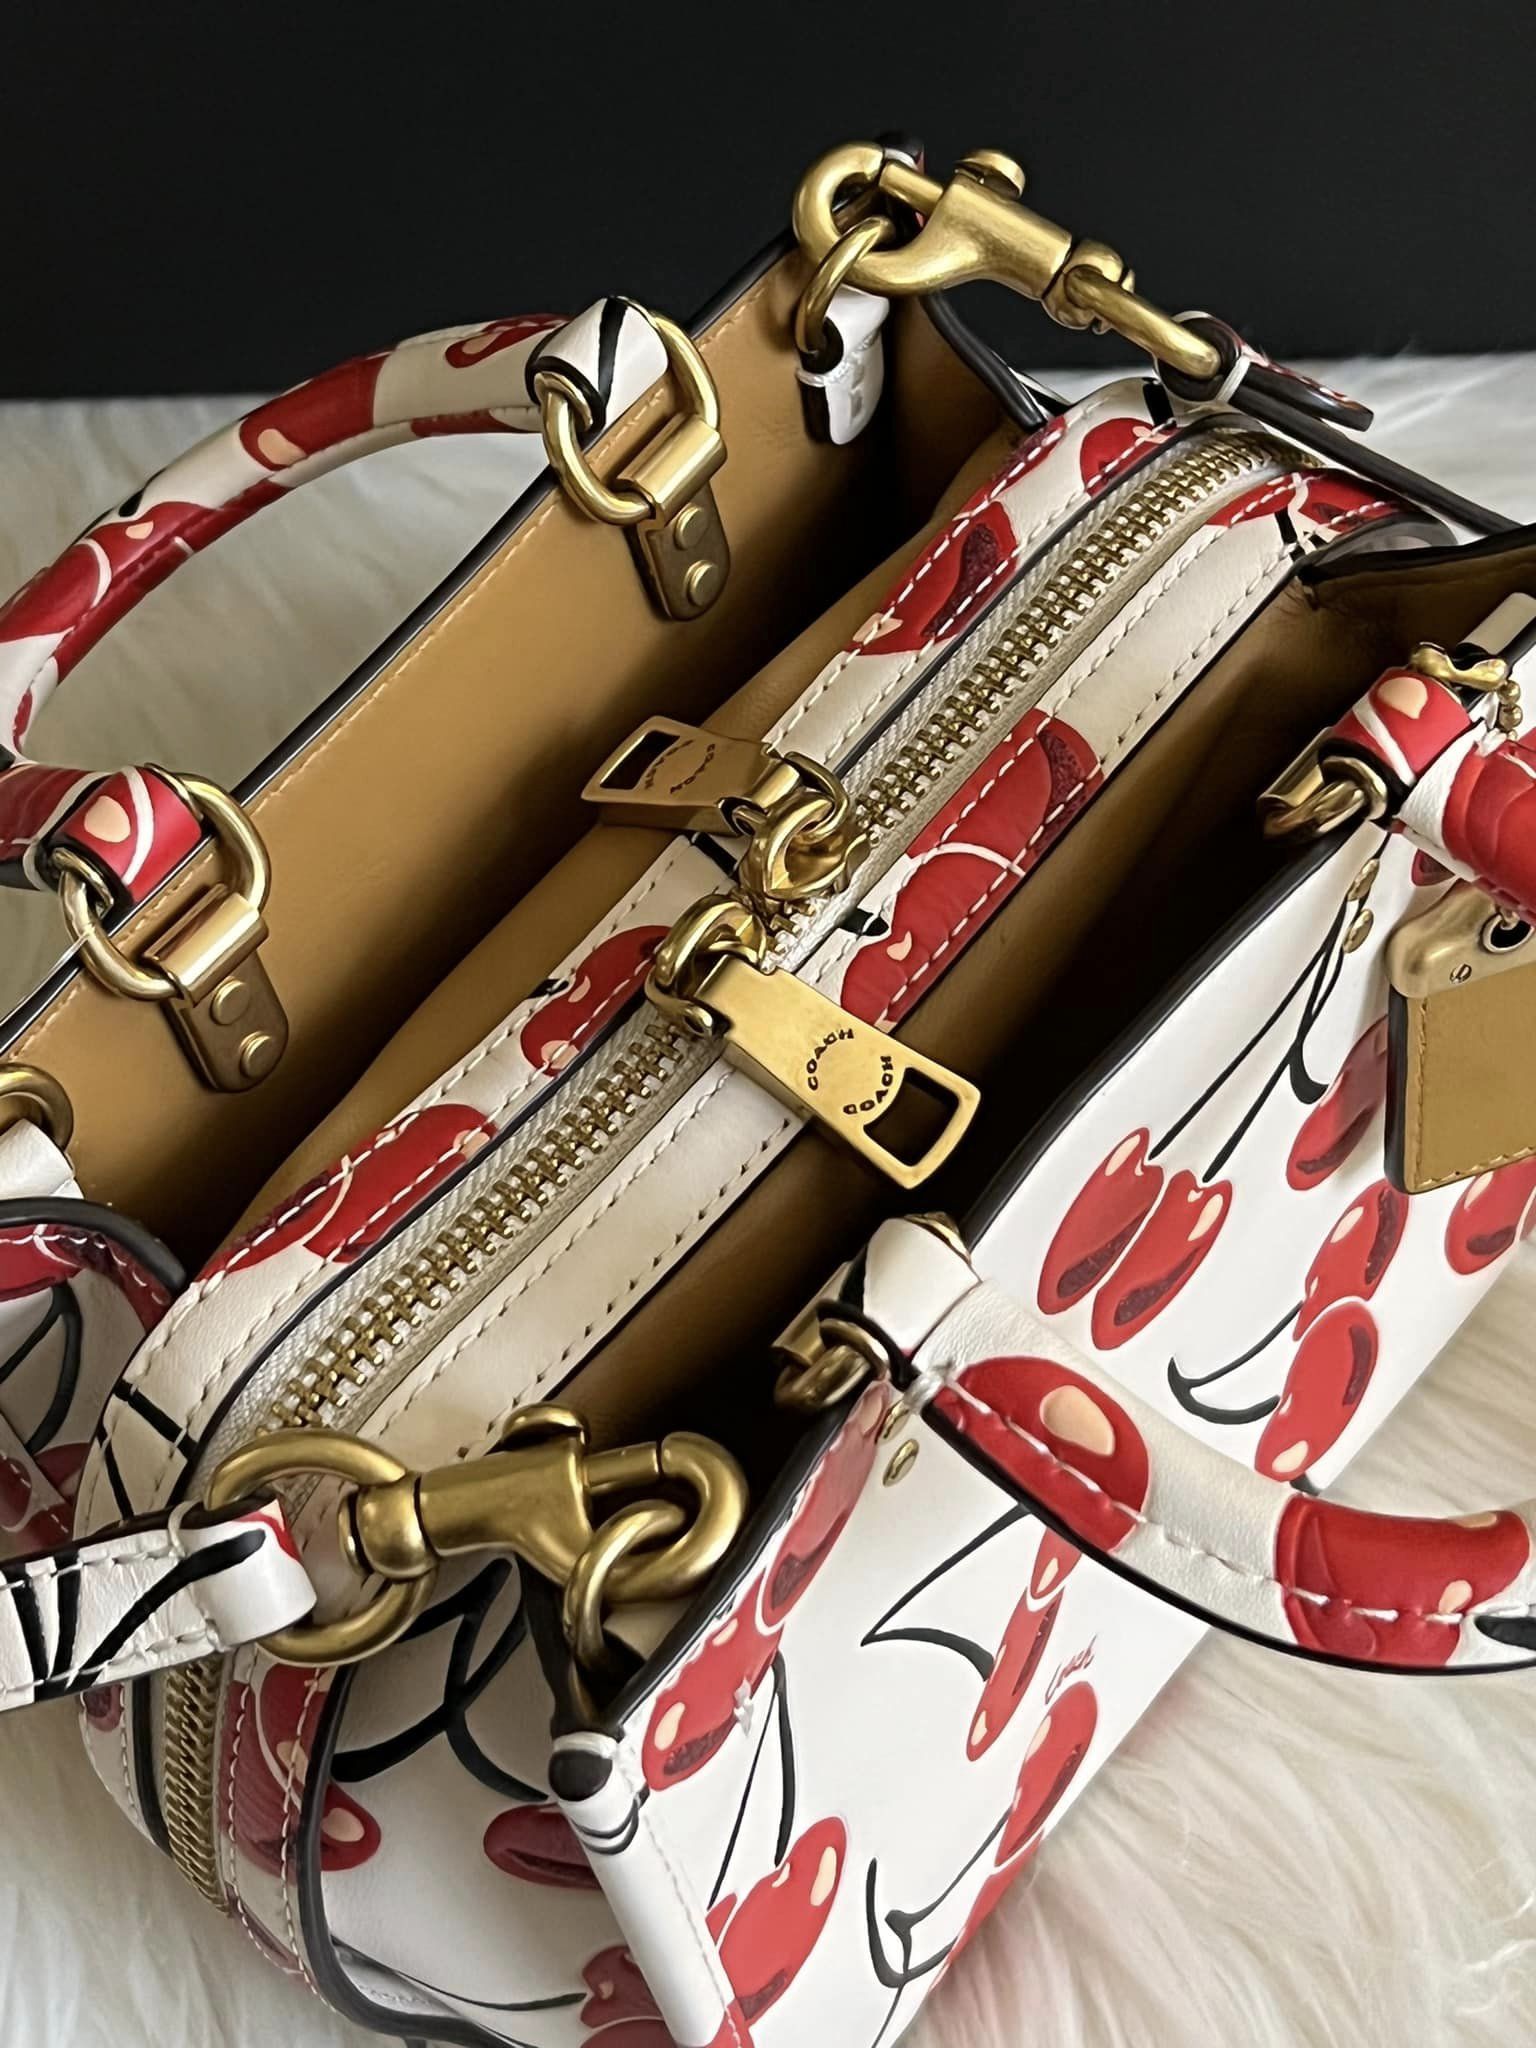 Cherry Print Bags